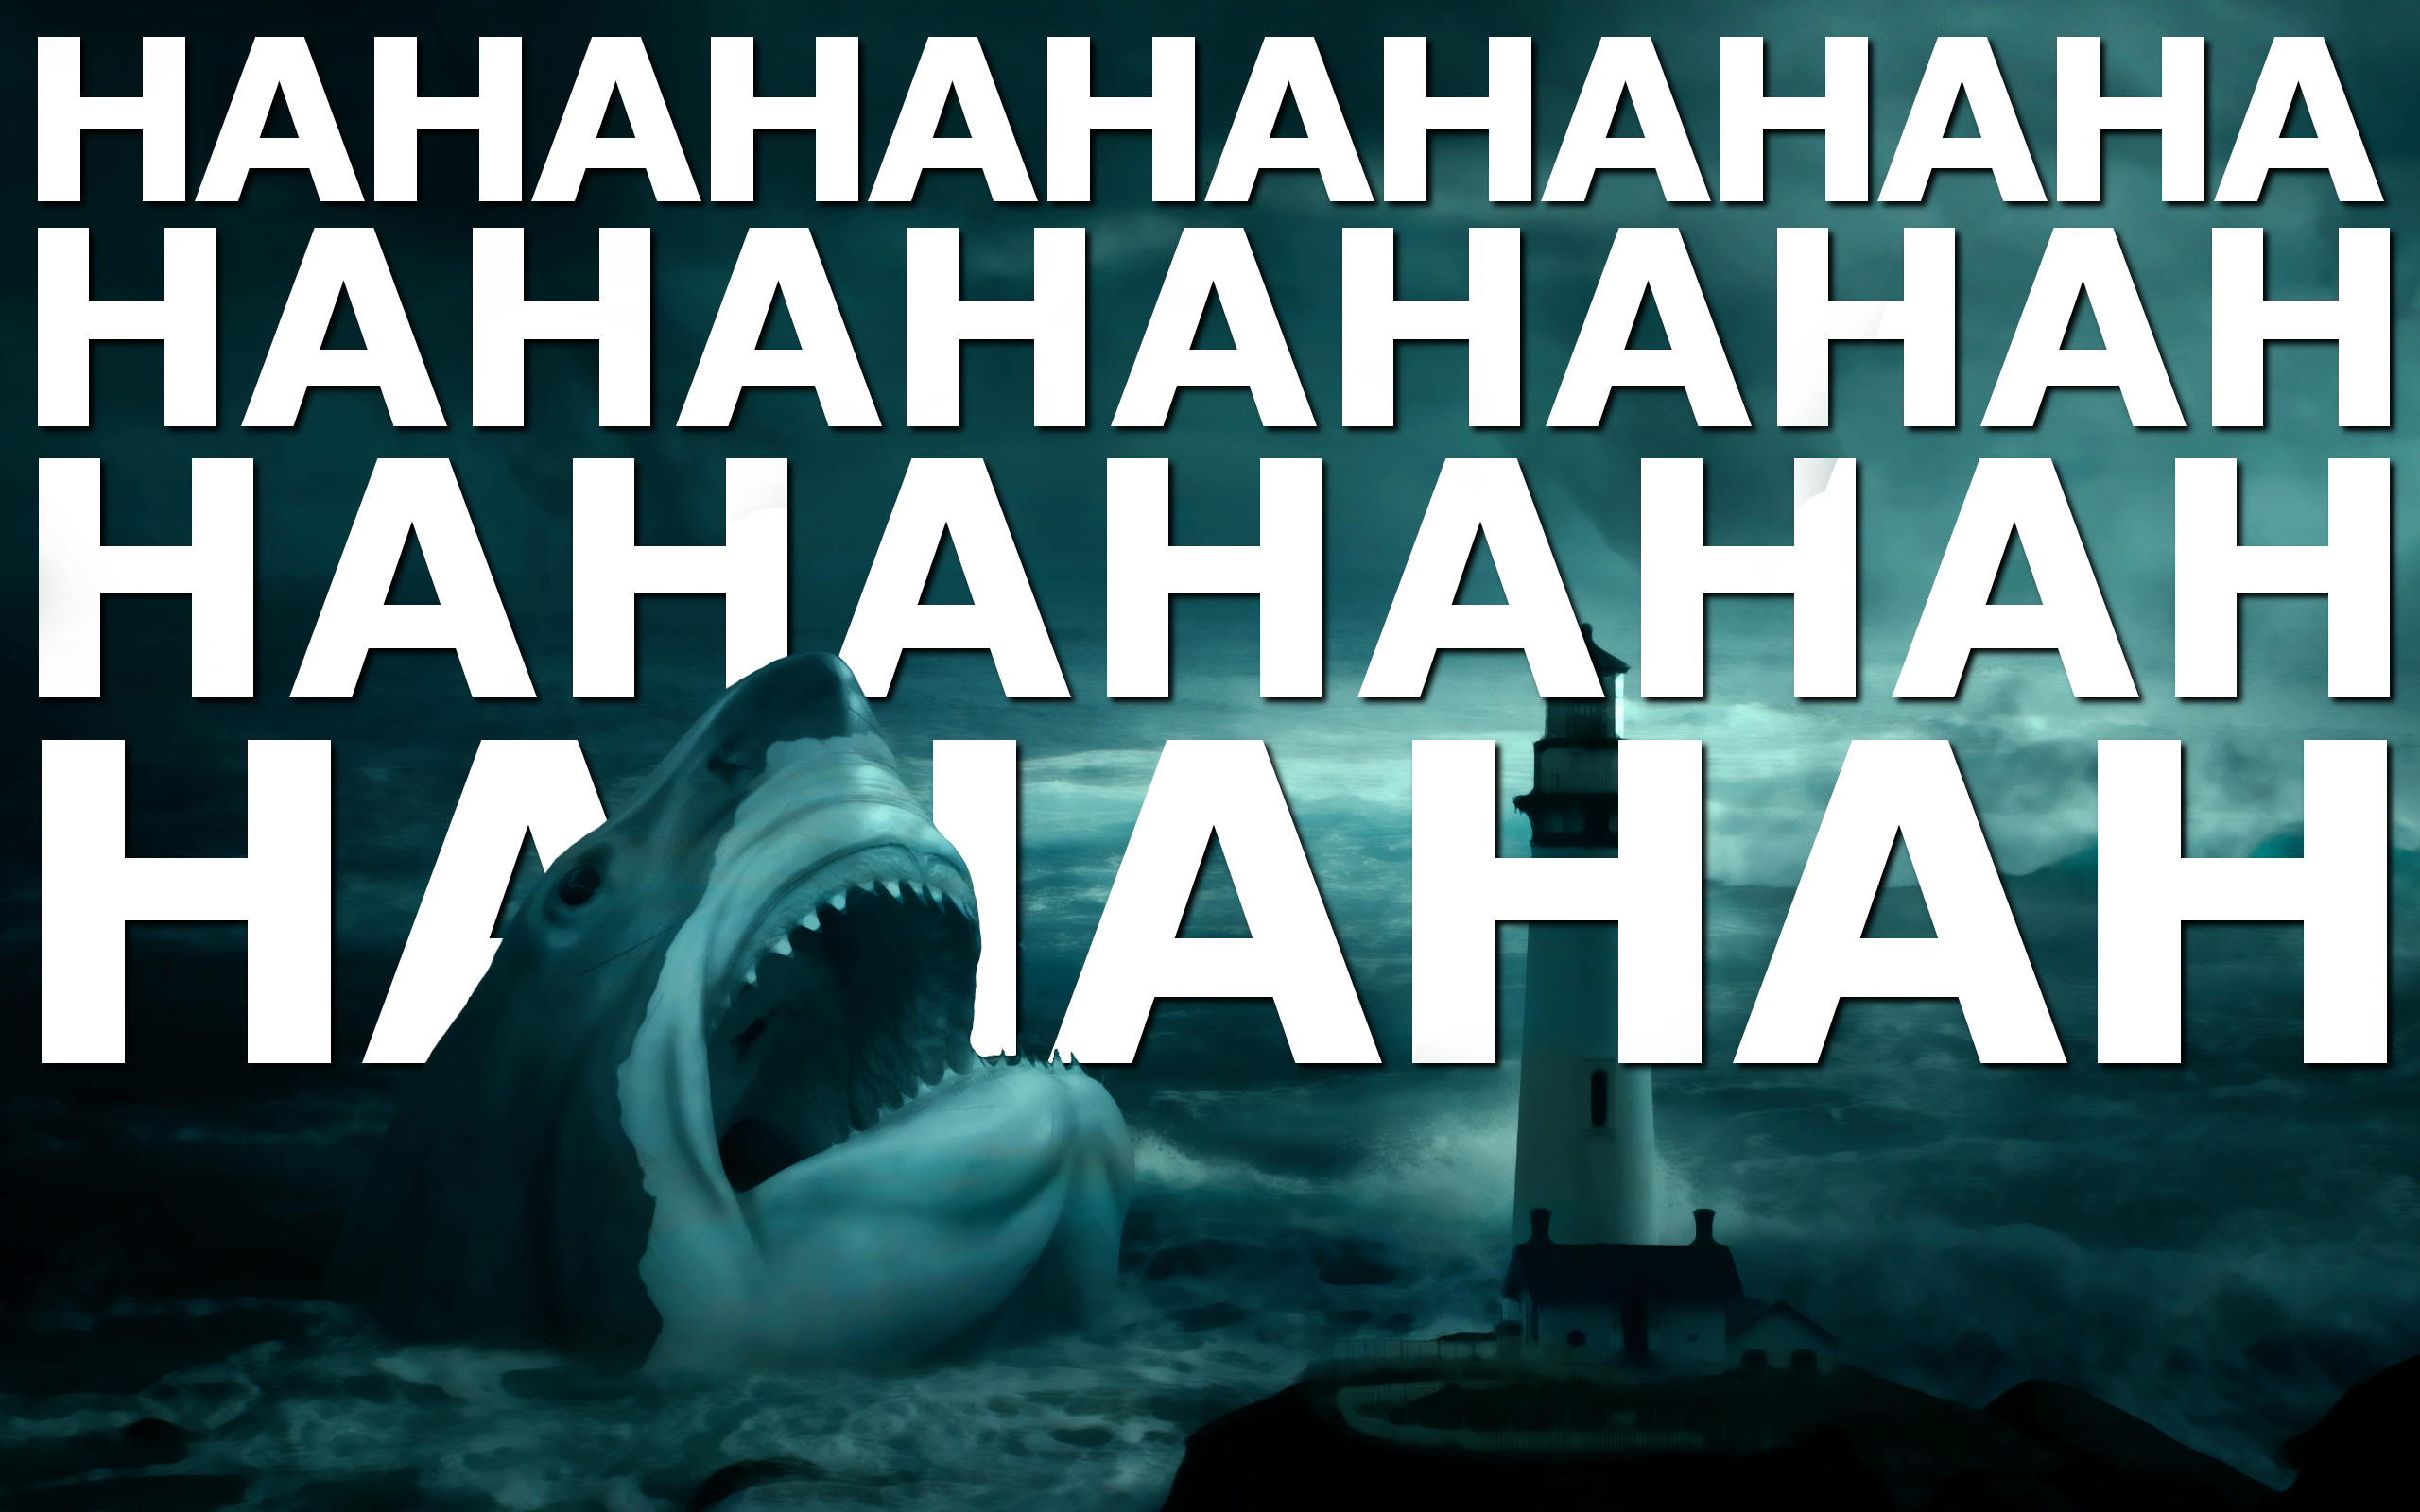 Laughing Shark Wallpaper